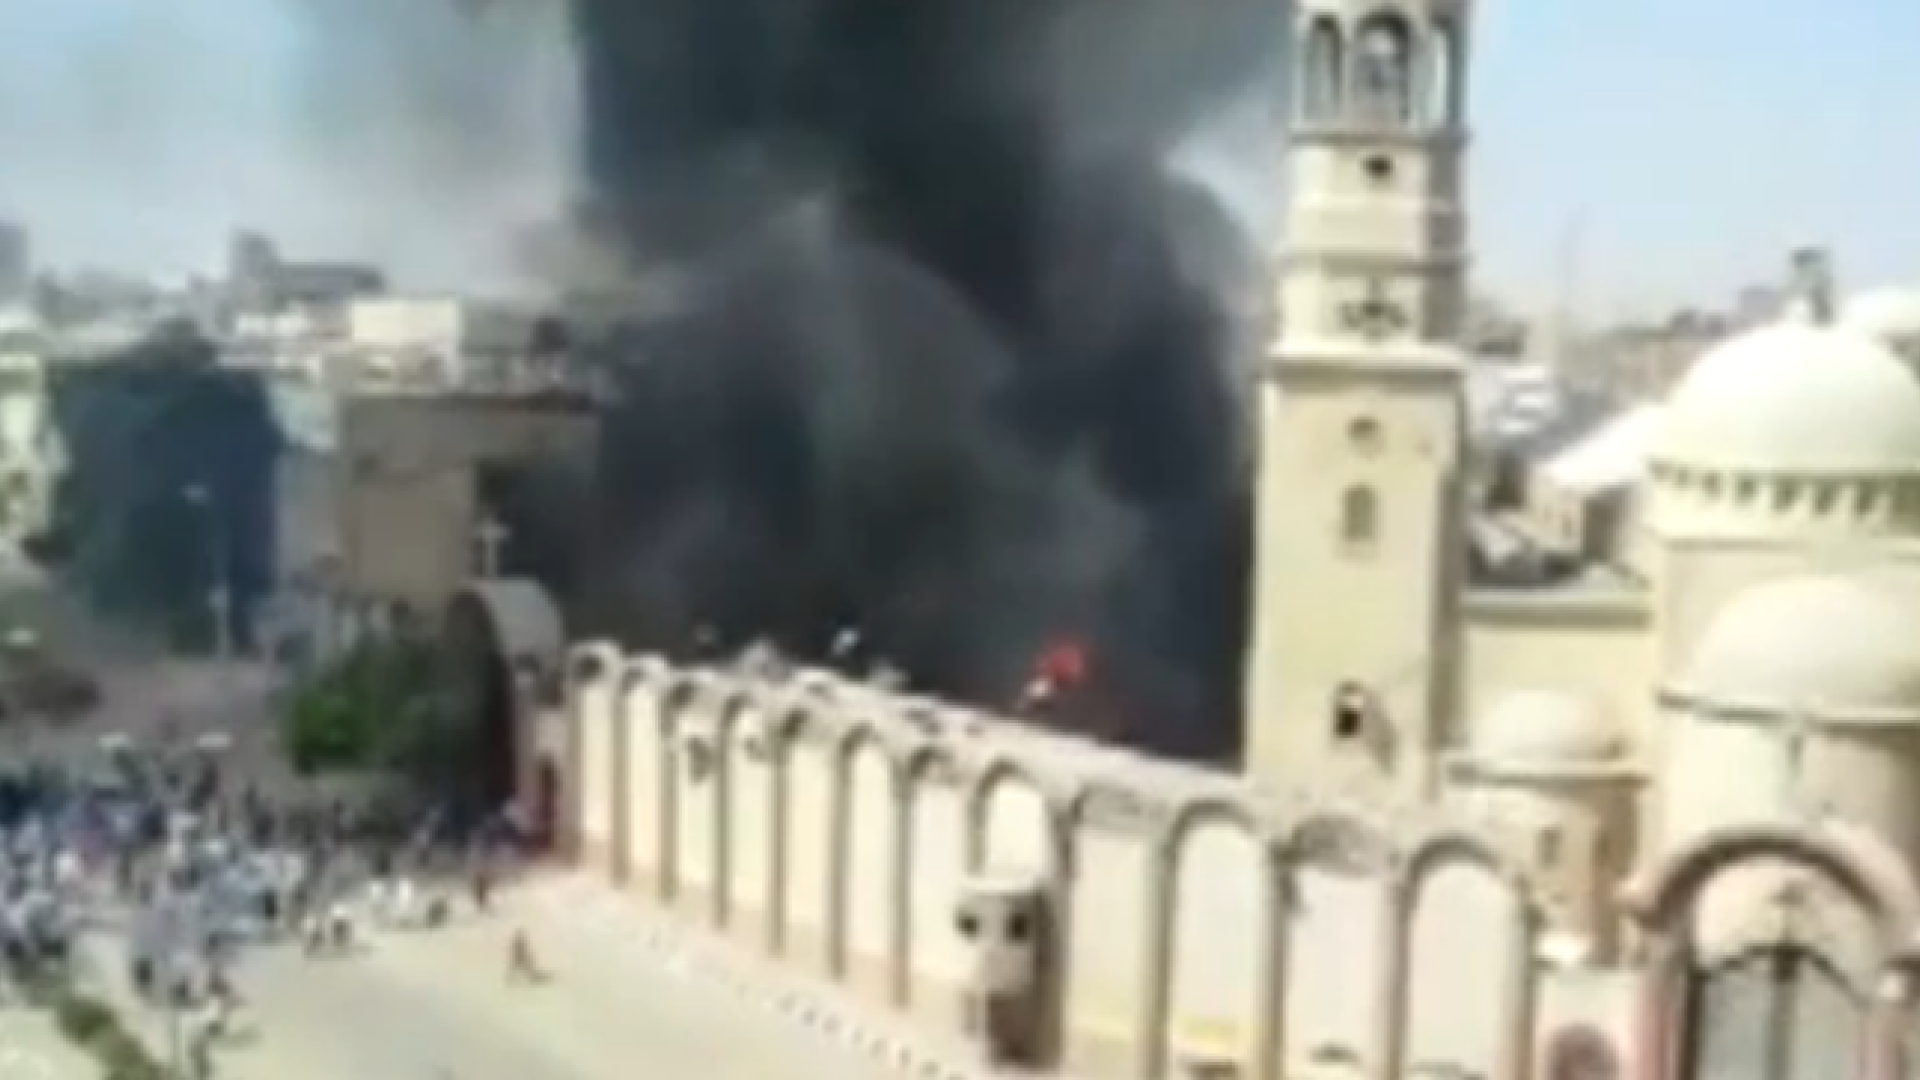 Atac biserici Egipt